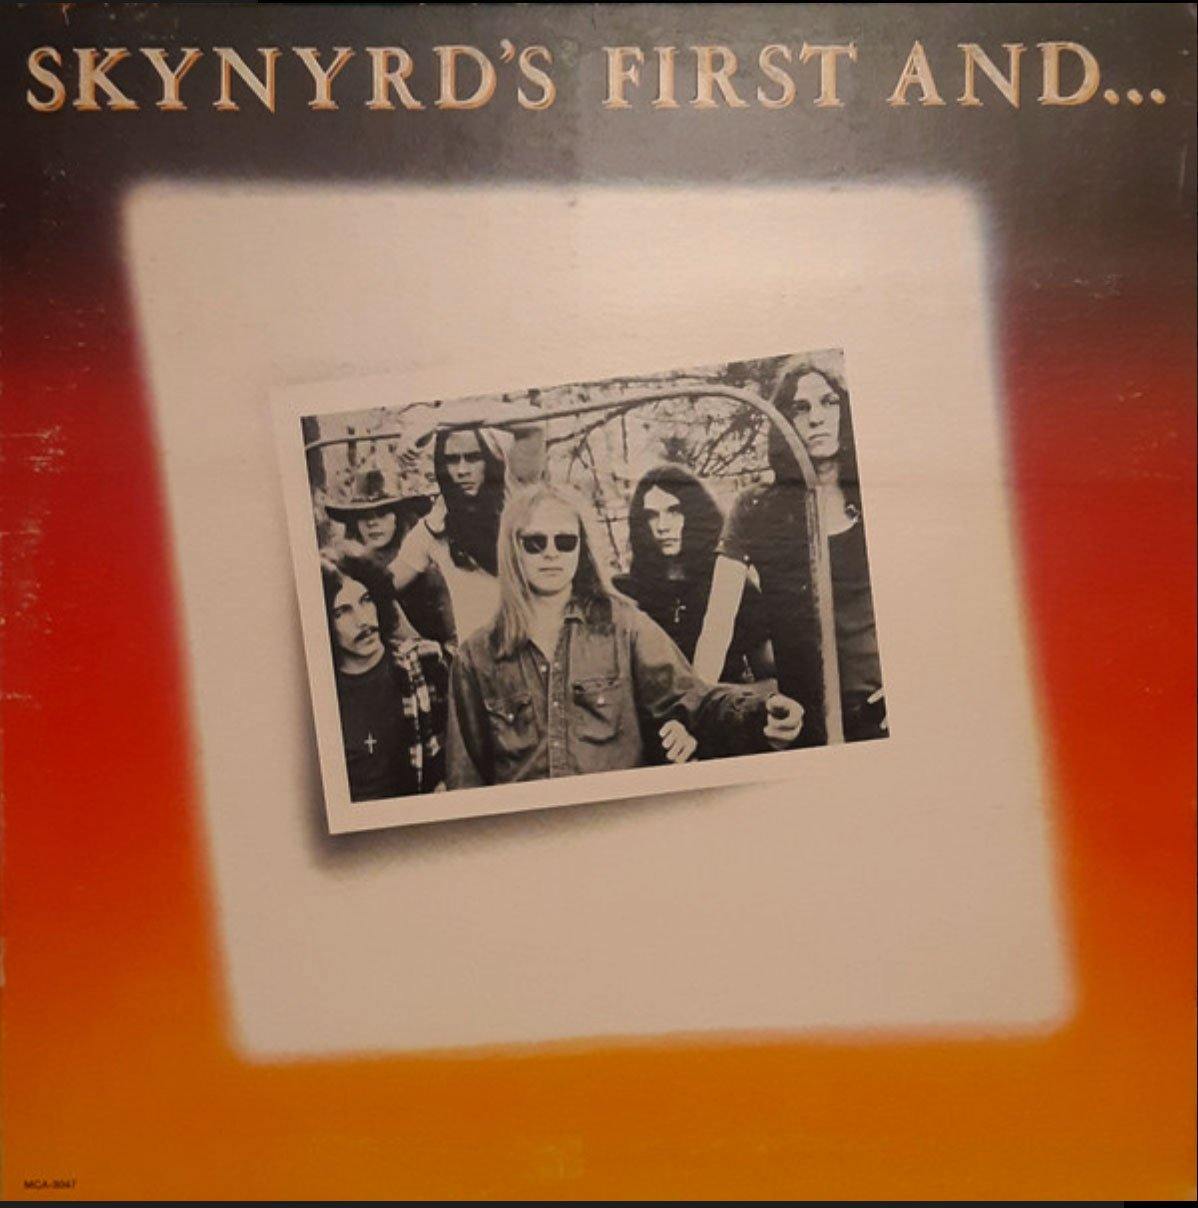 LYNYRD SKYNYRD - Skynyrd's First And Last - VinylPursuit.com